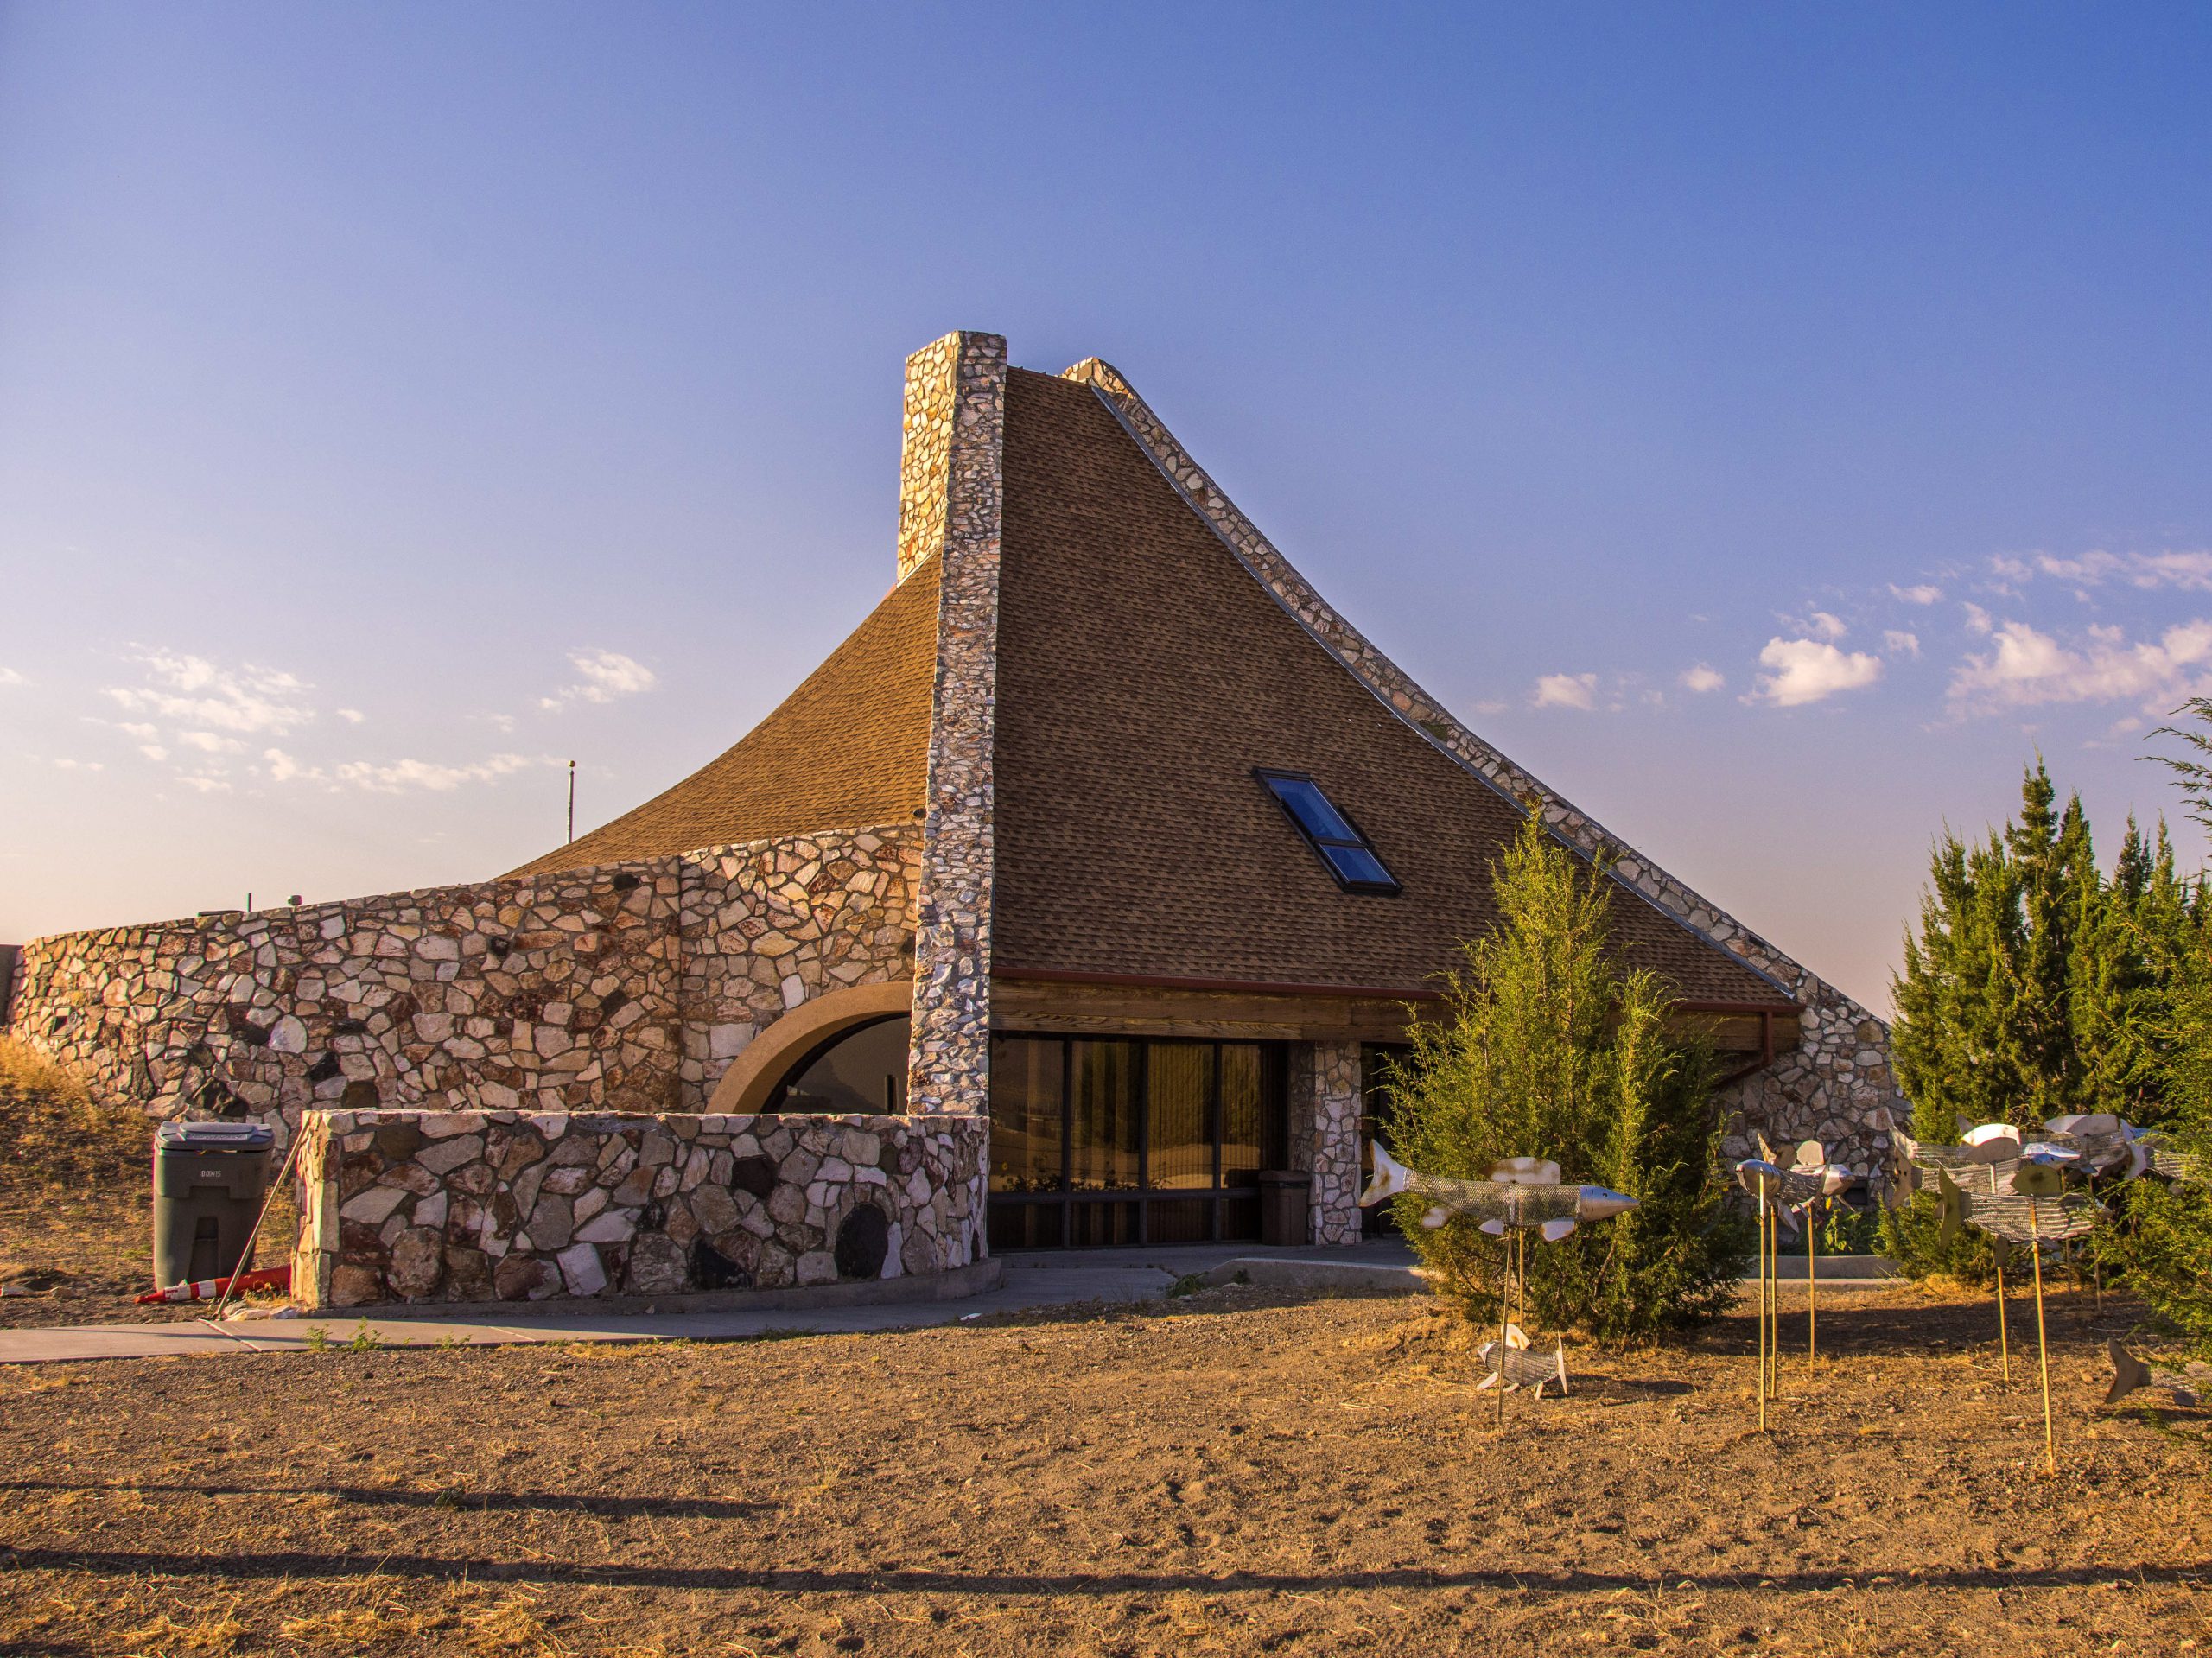 Pyramid Lake Paiute Tribe Museum and Visitors Center